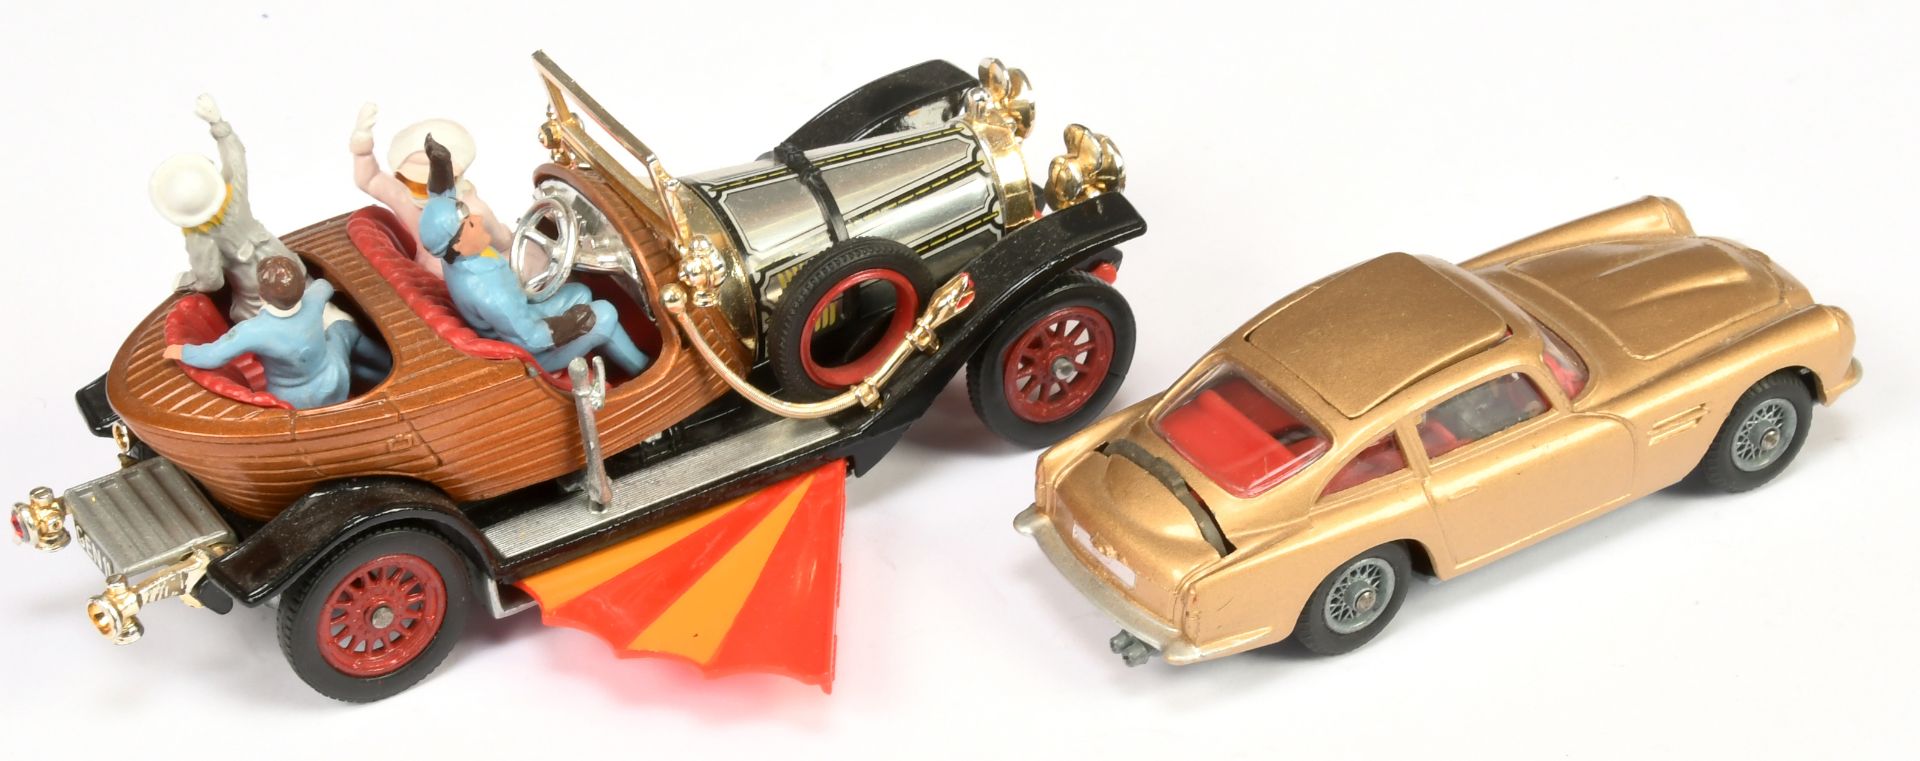 Corgi Toys 261 "James Bond" Aston Martin "Goldfinger" - Gold Body, red interior with "James Bond"... - Image 2 of 2